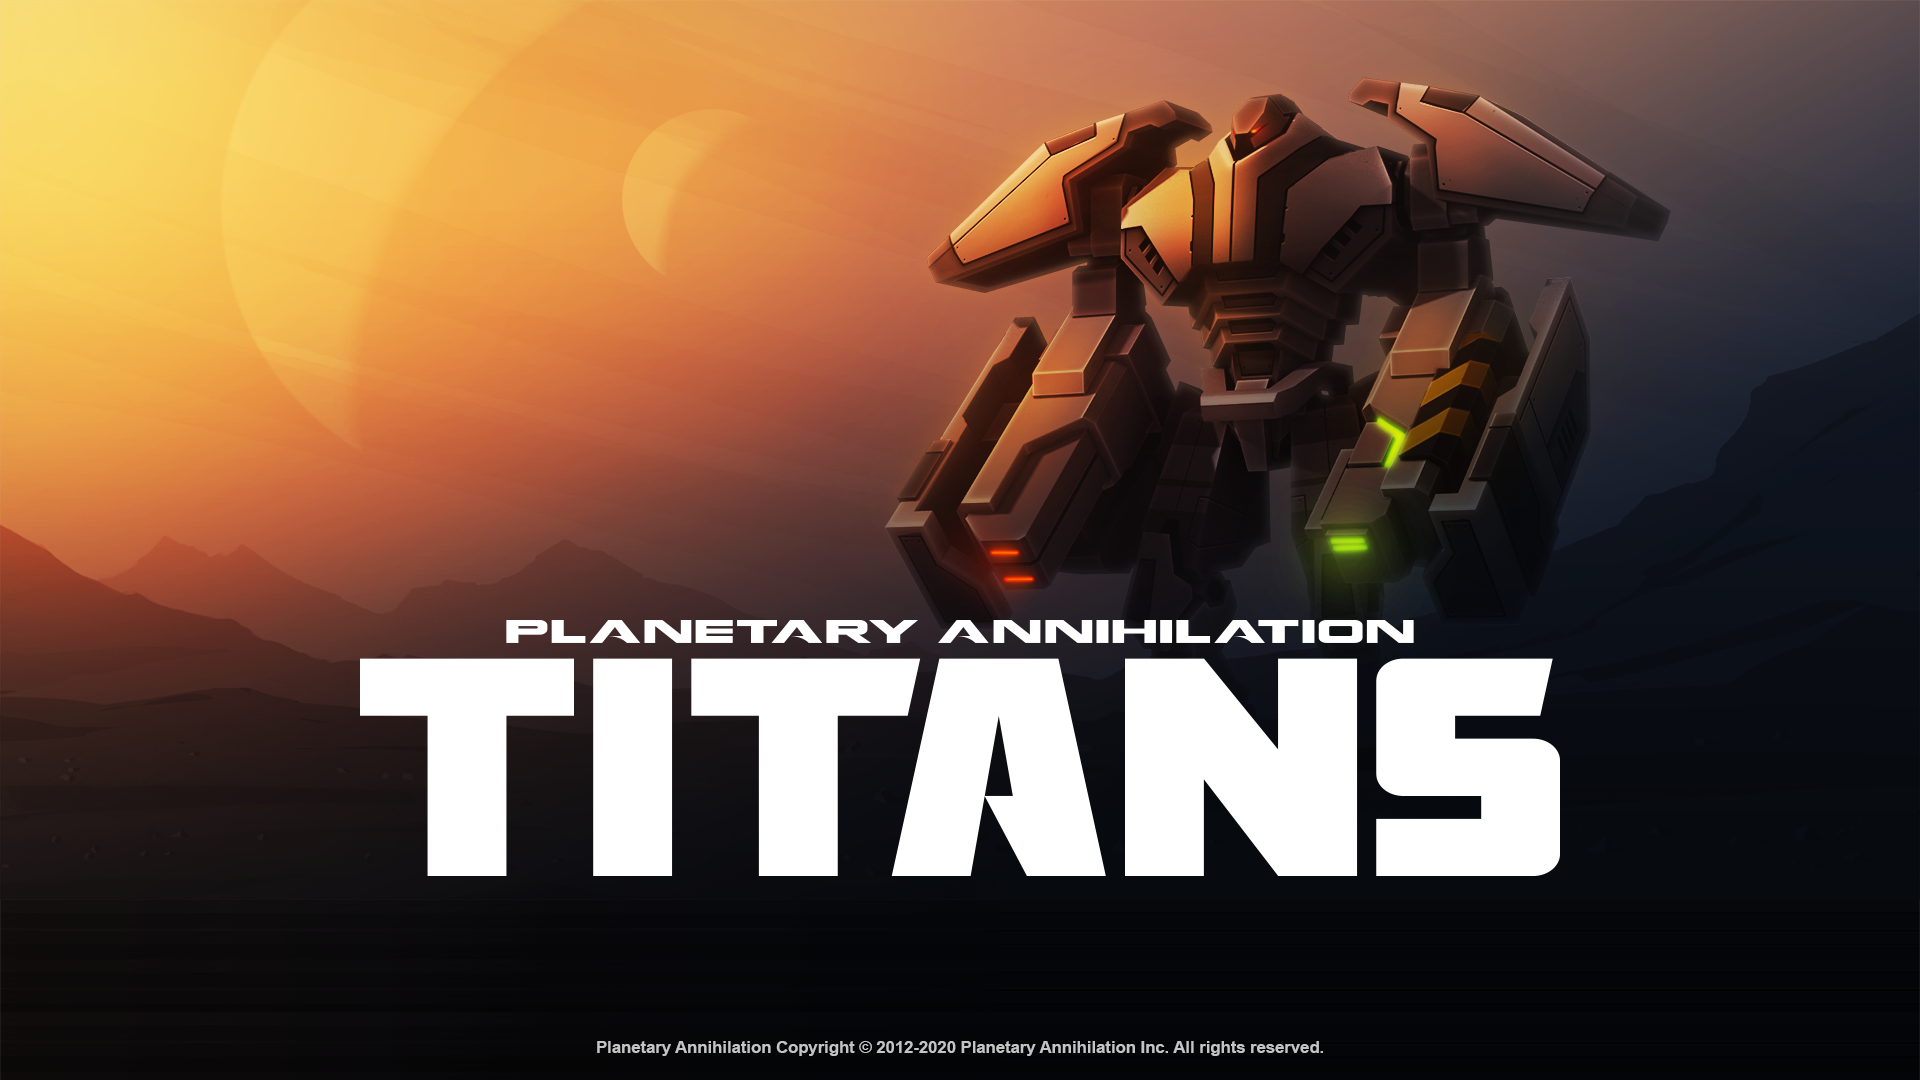 Planetary annihilation titan steam фото 98